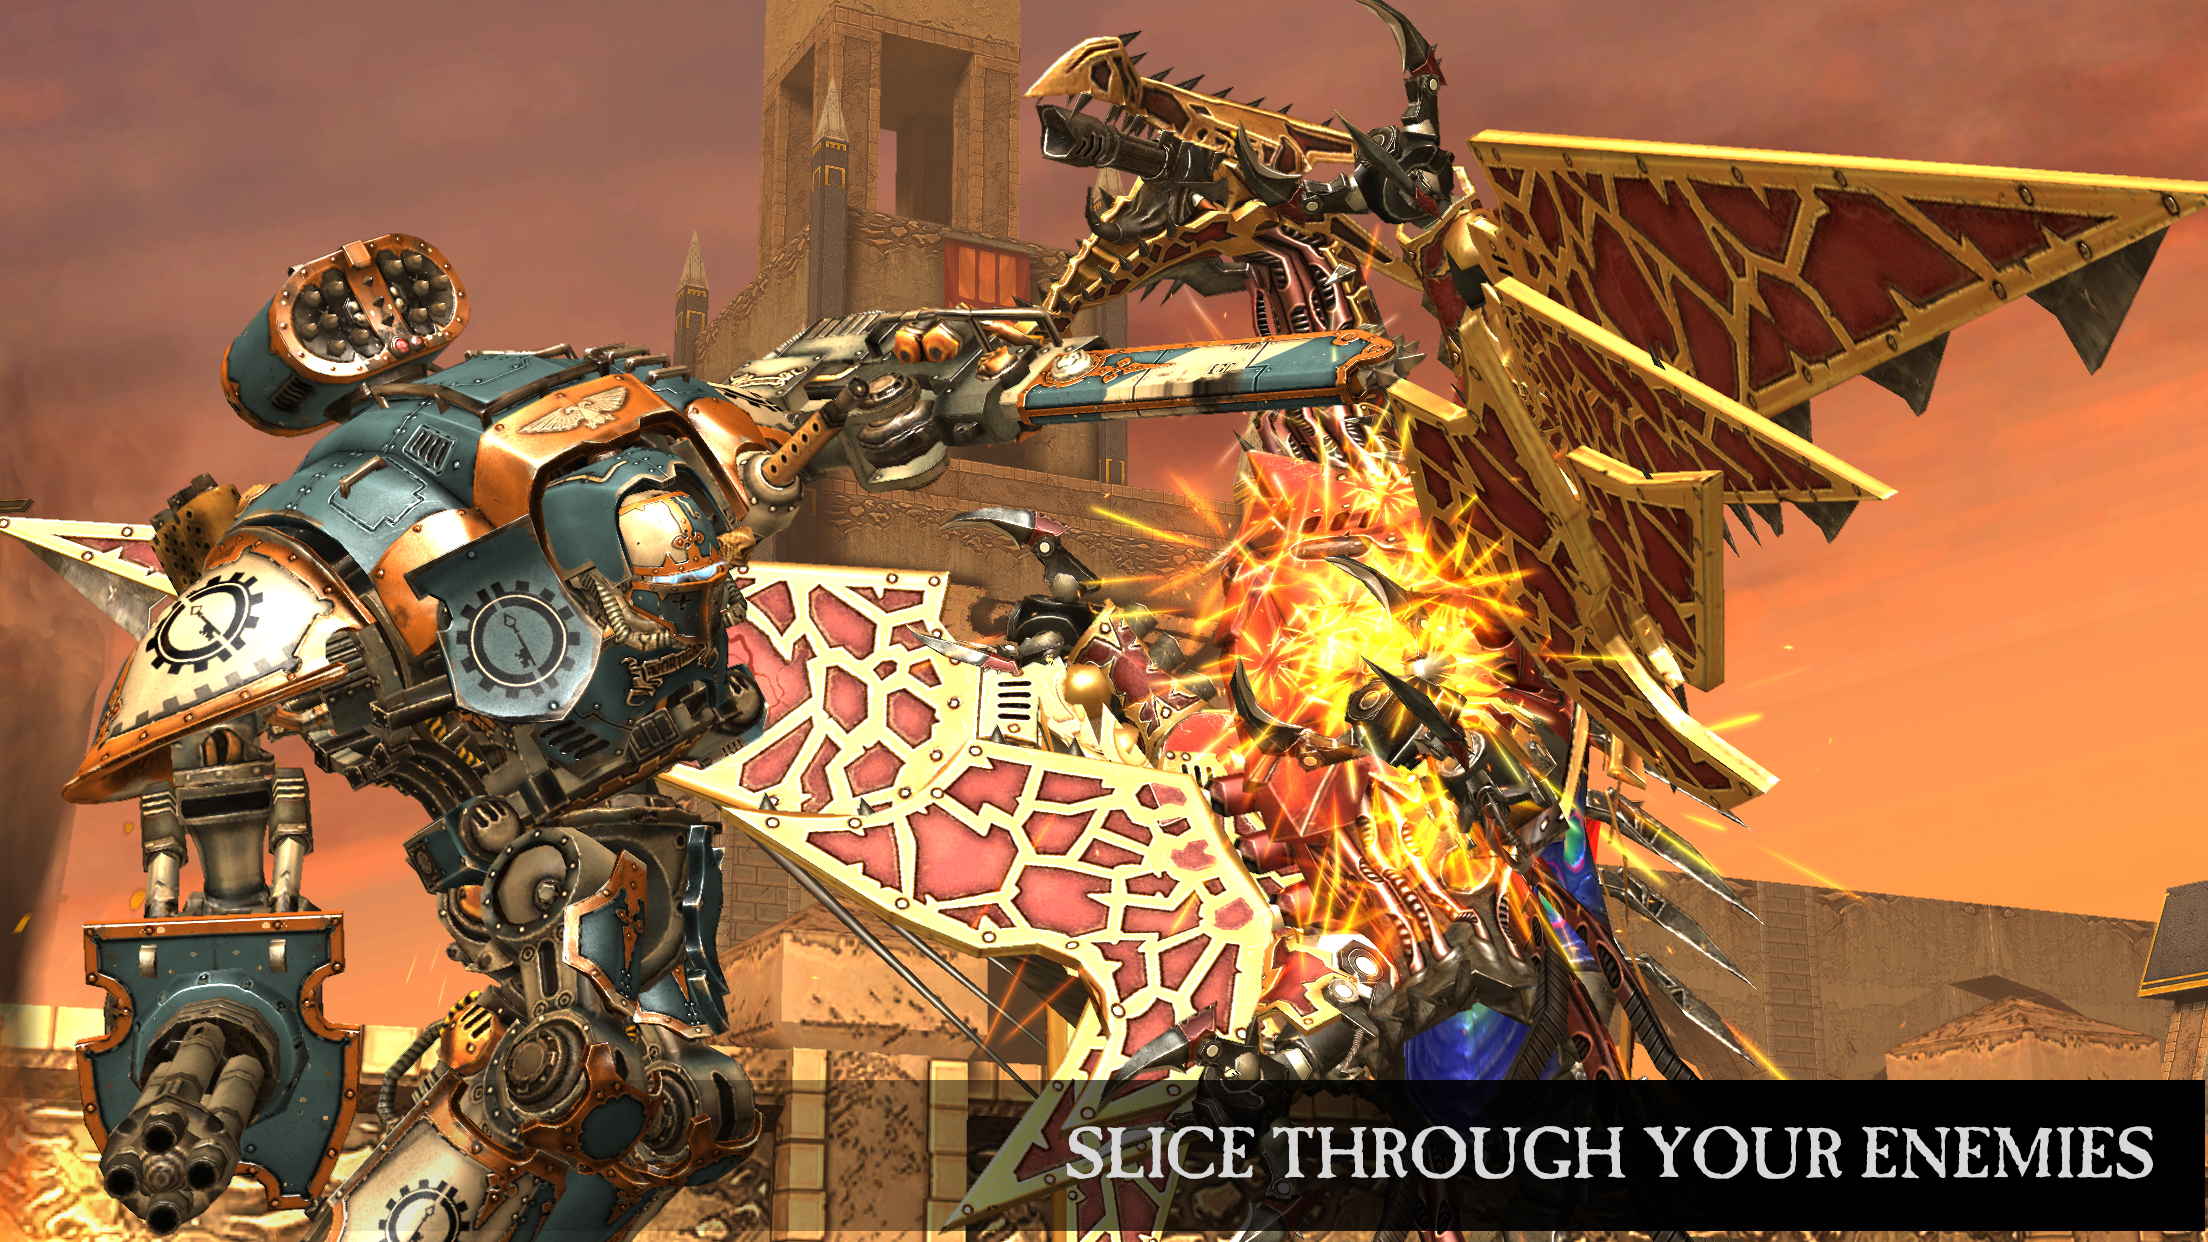 Screenshot of Warhammer 40,000: Freeblade